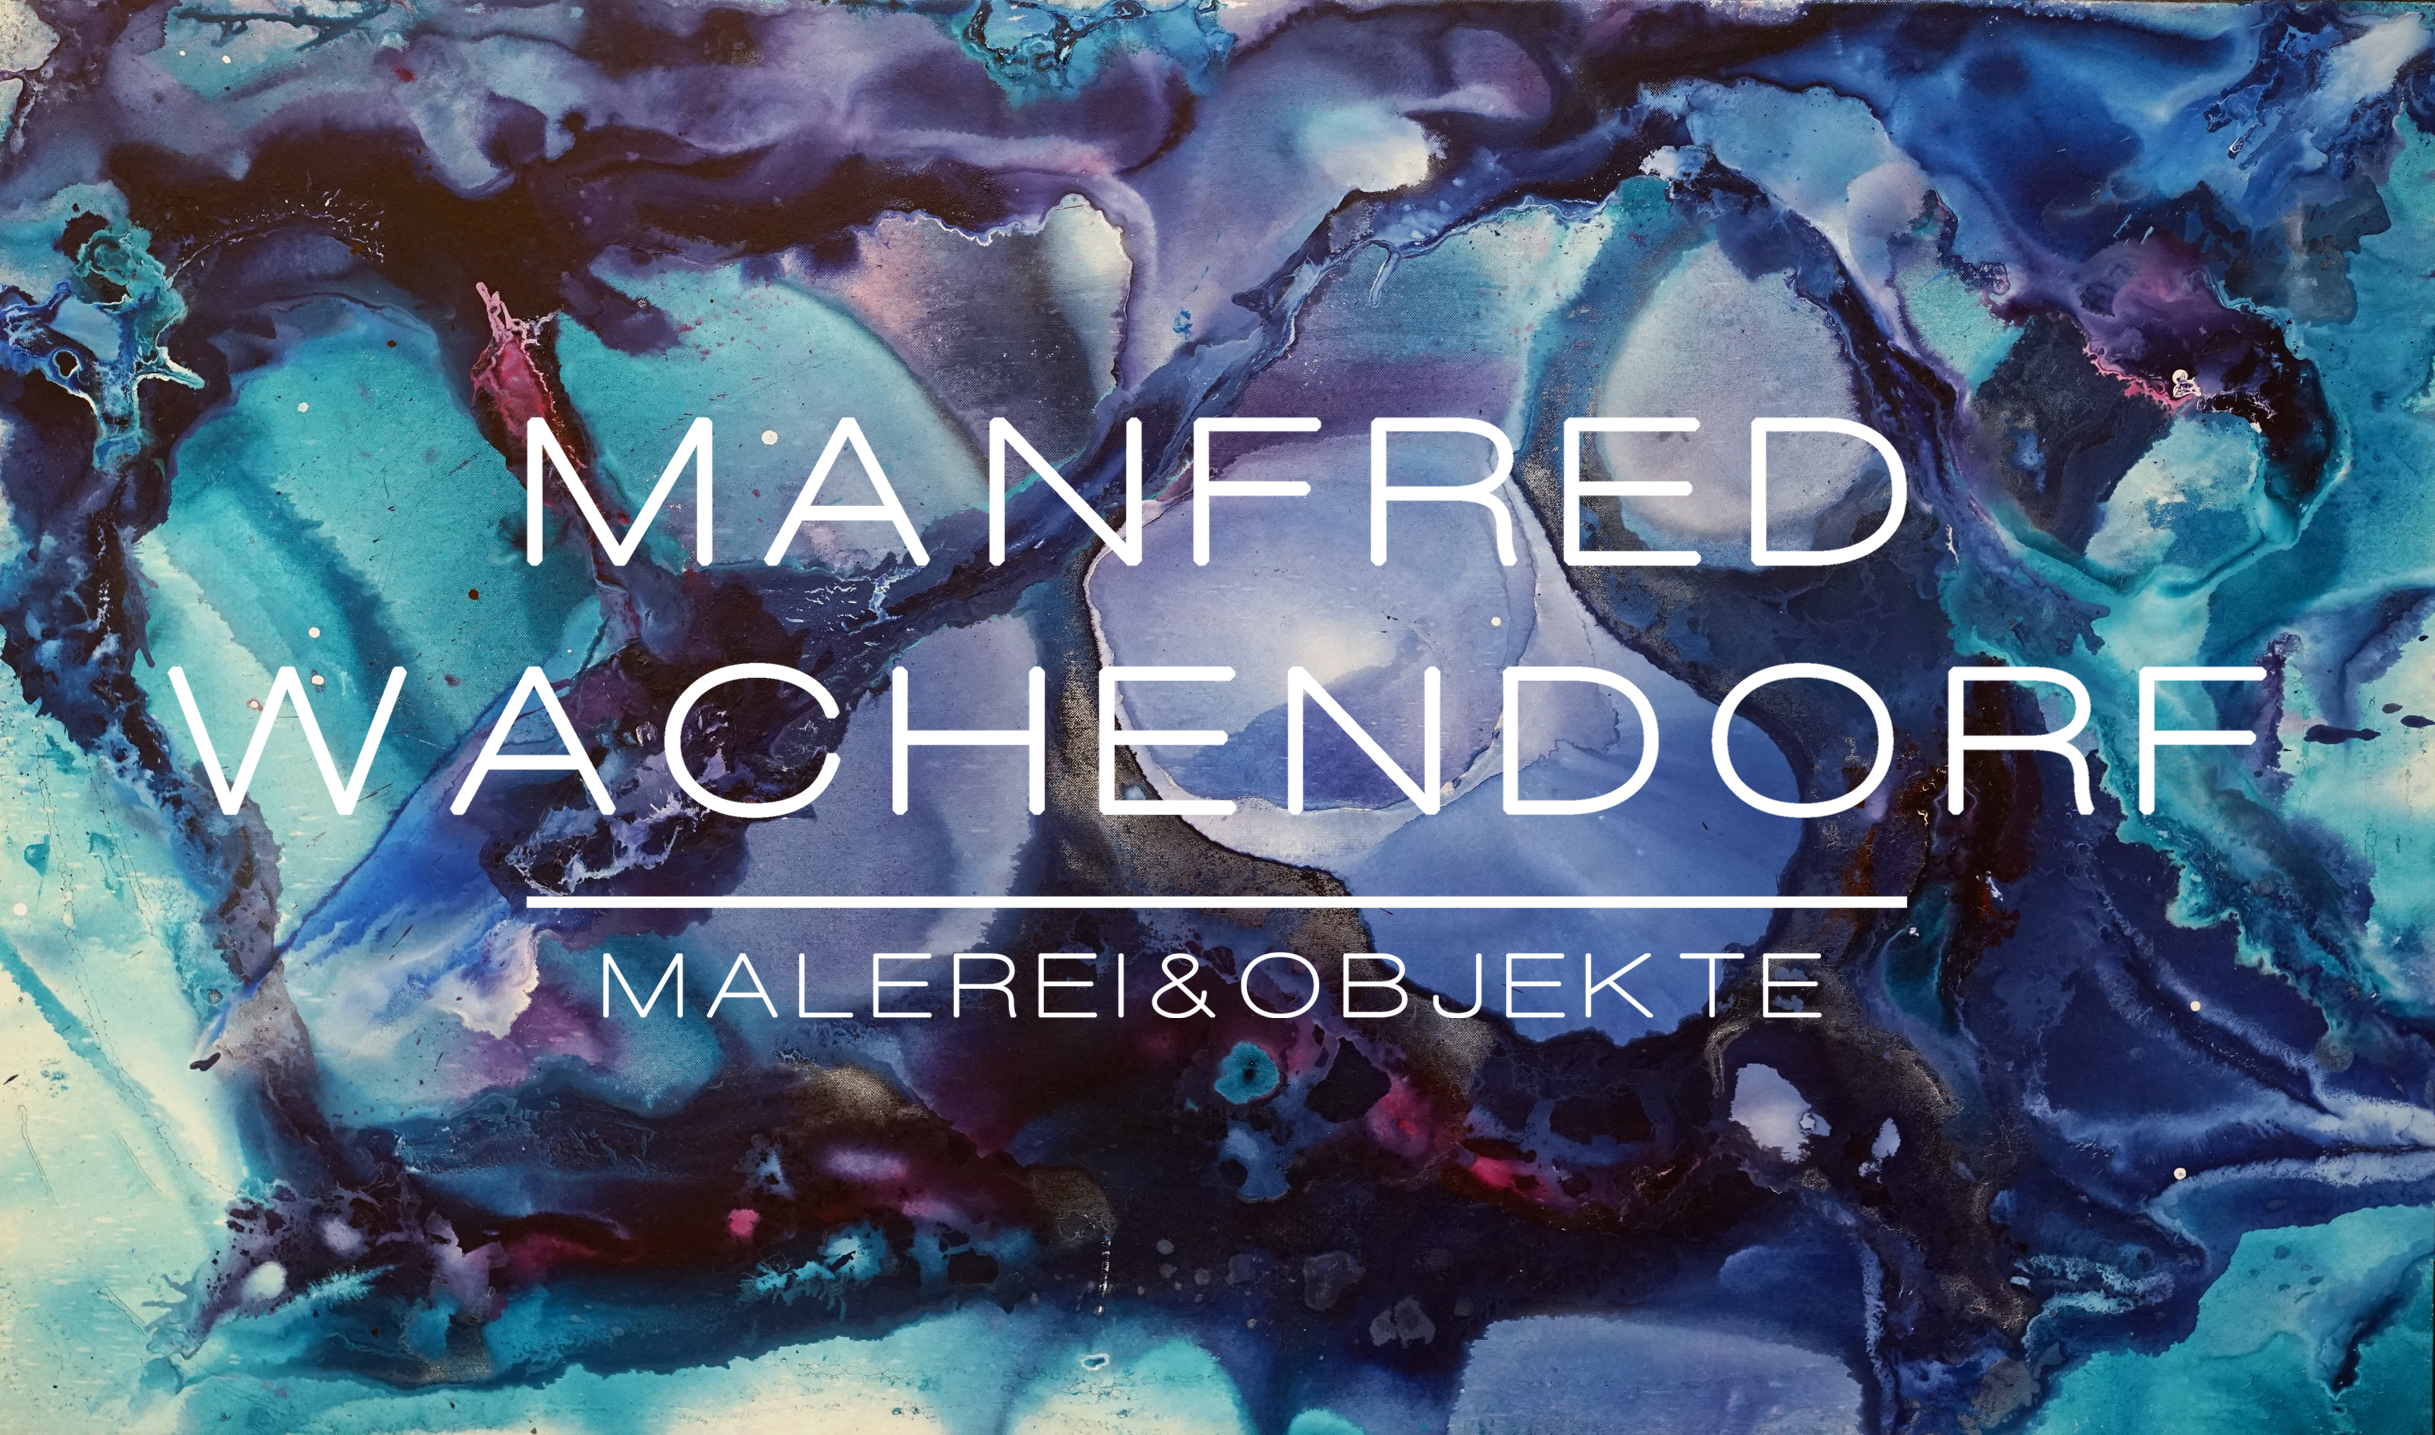 (c) Manfredwachendorf.com